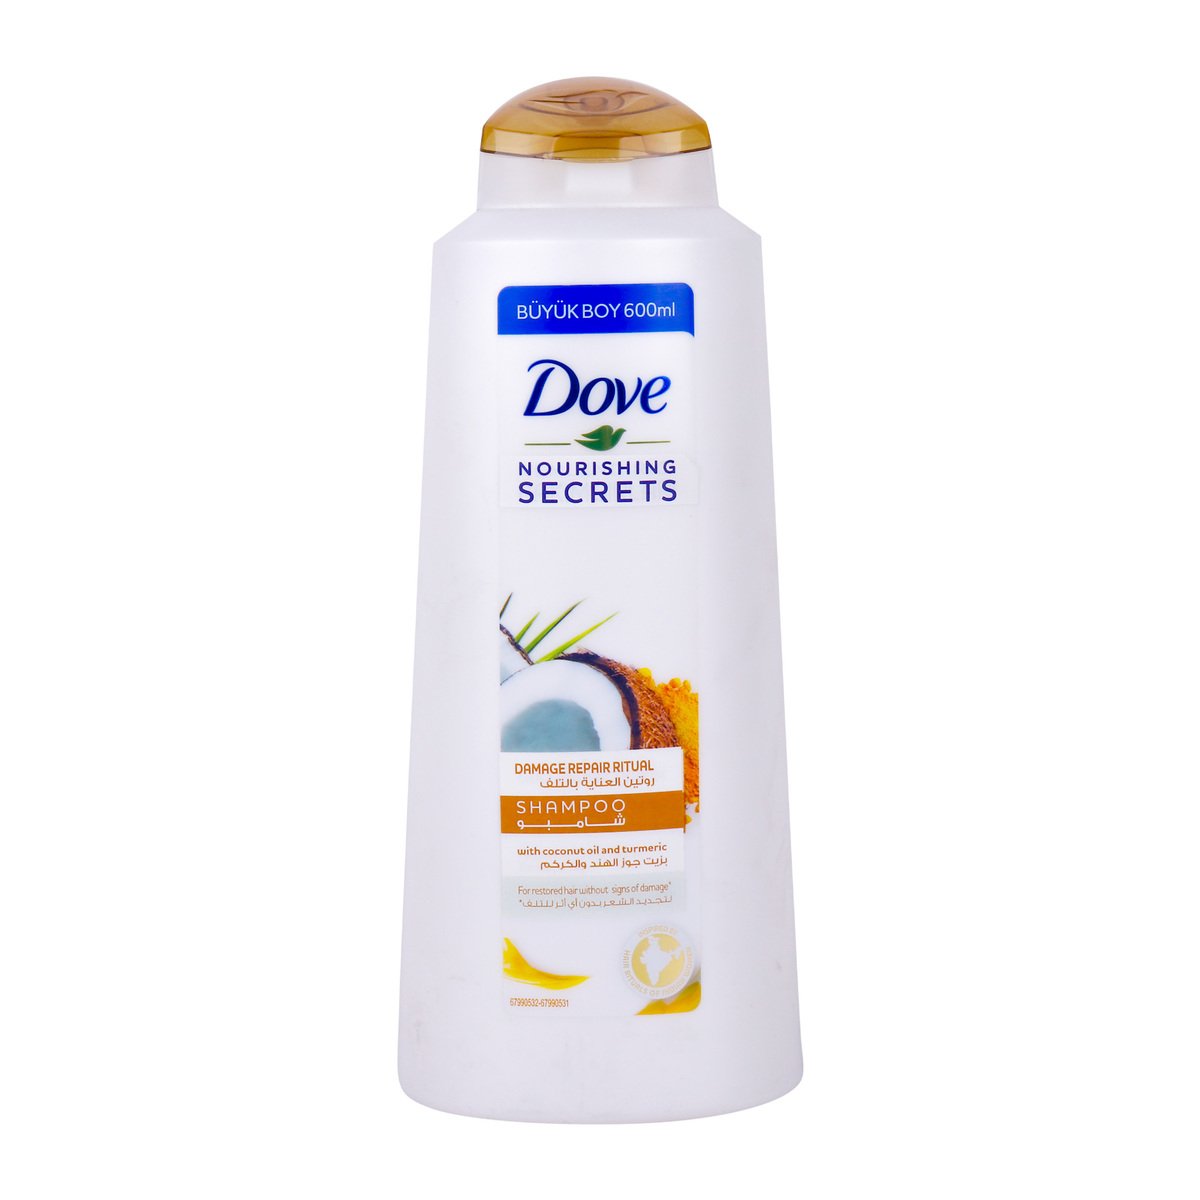 Dove Nourishing Secrets Shampoo Damage Repair Ritual 600ml